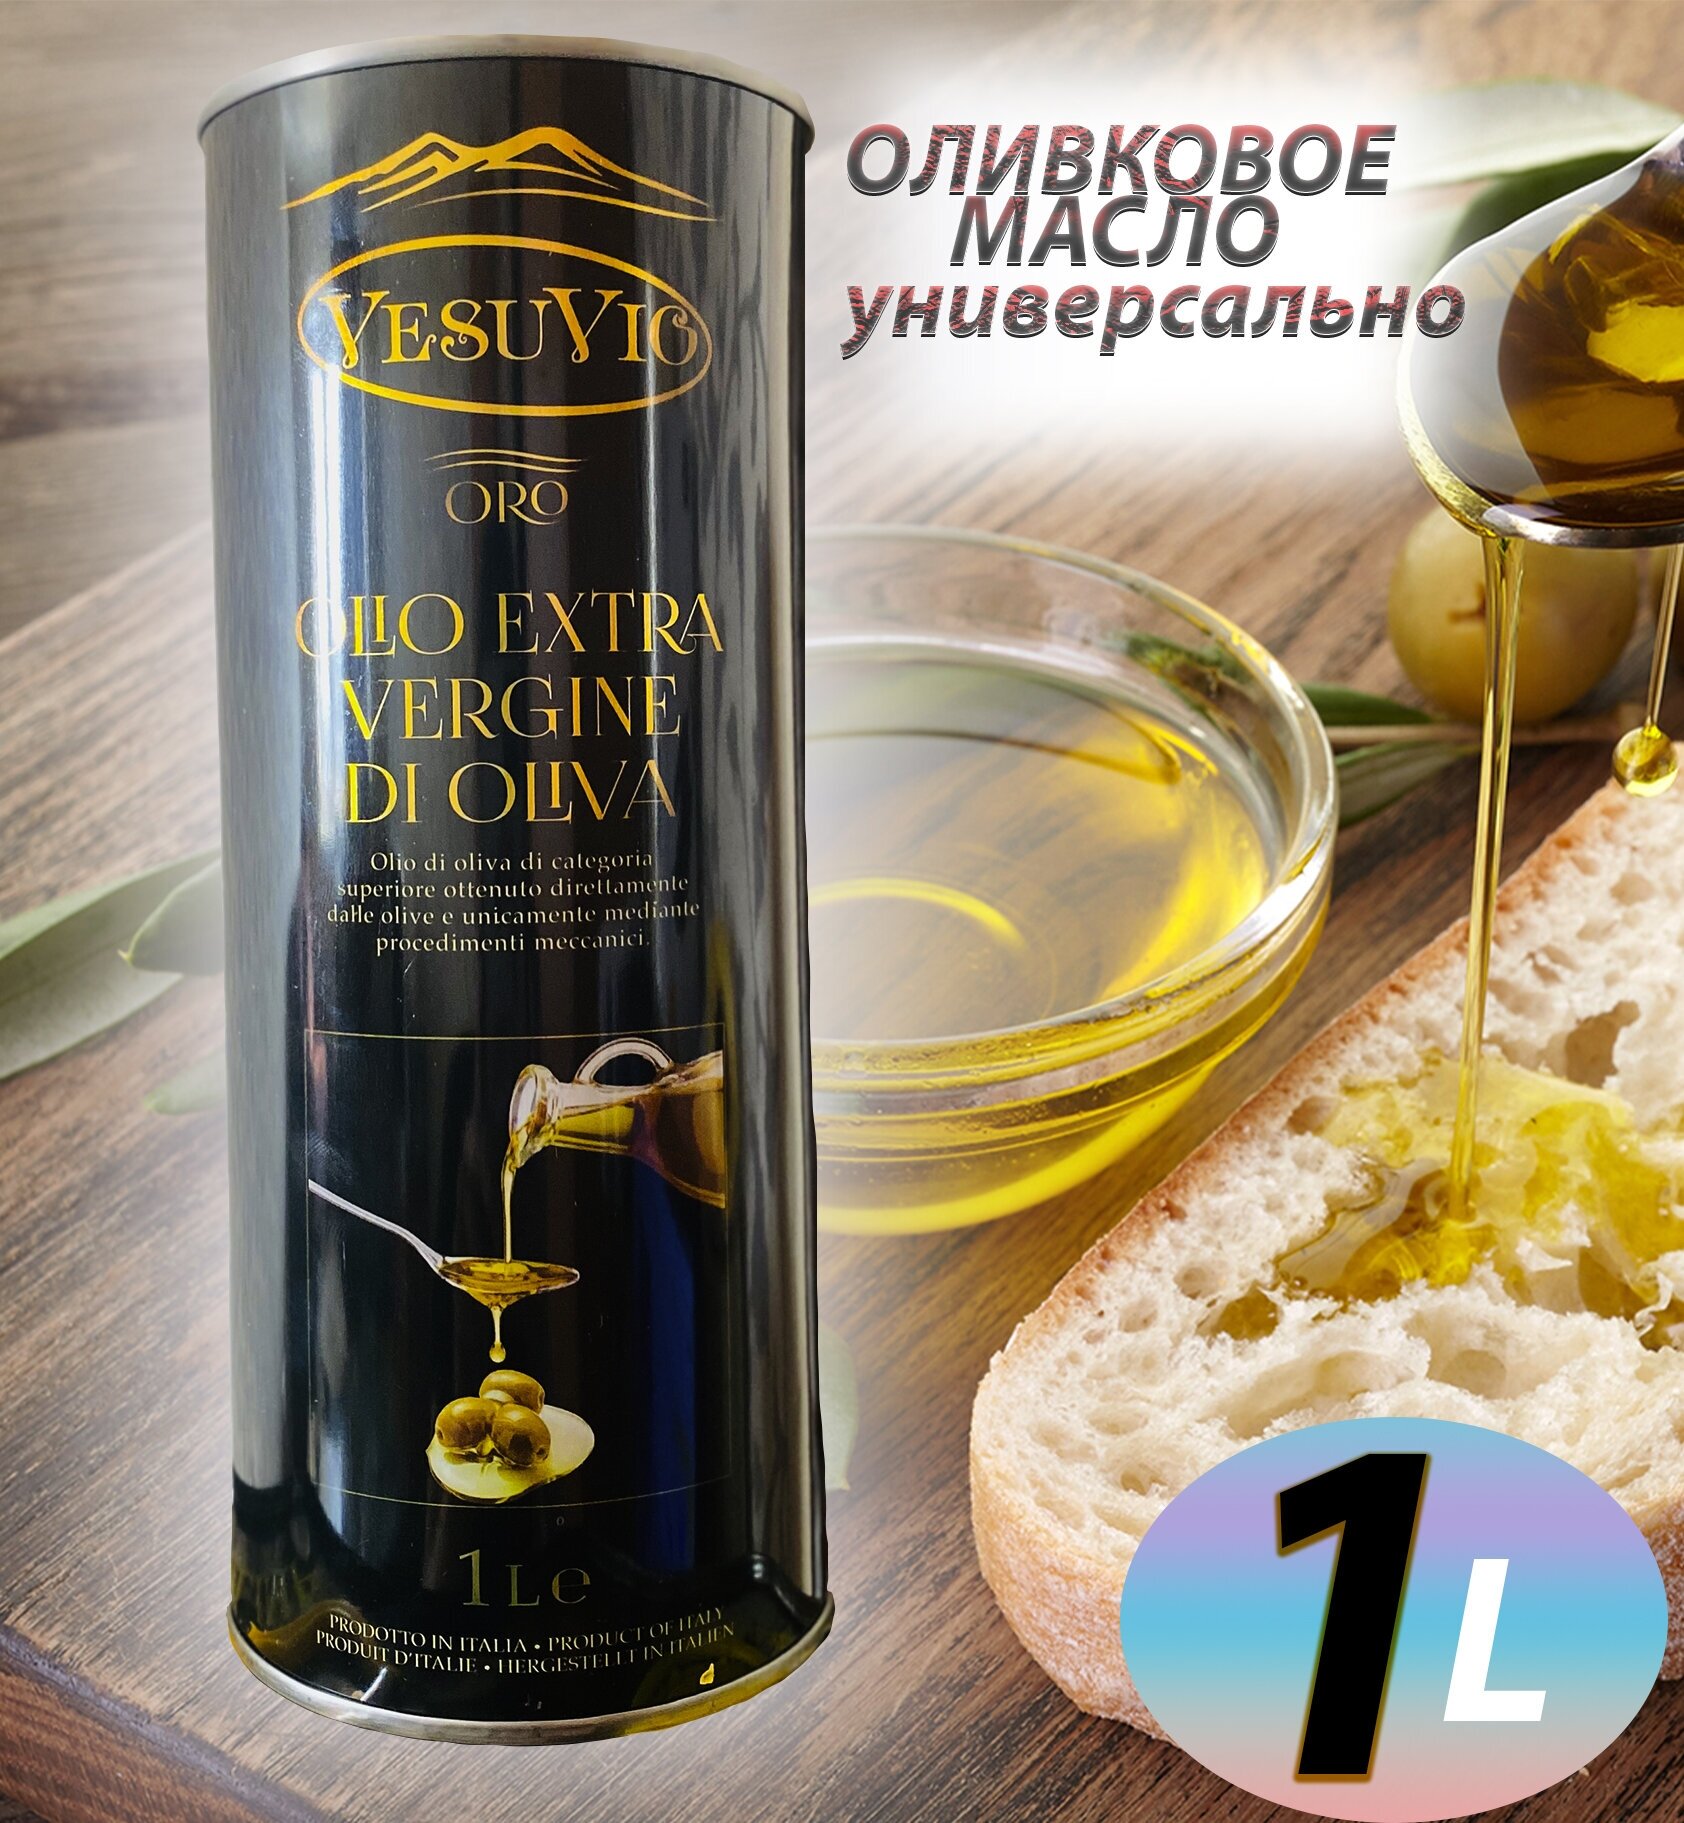 Оливковое масло Vesuvio OLIO EXTRA VIRGIN DI OLIVA холодный отжим 1л